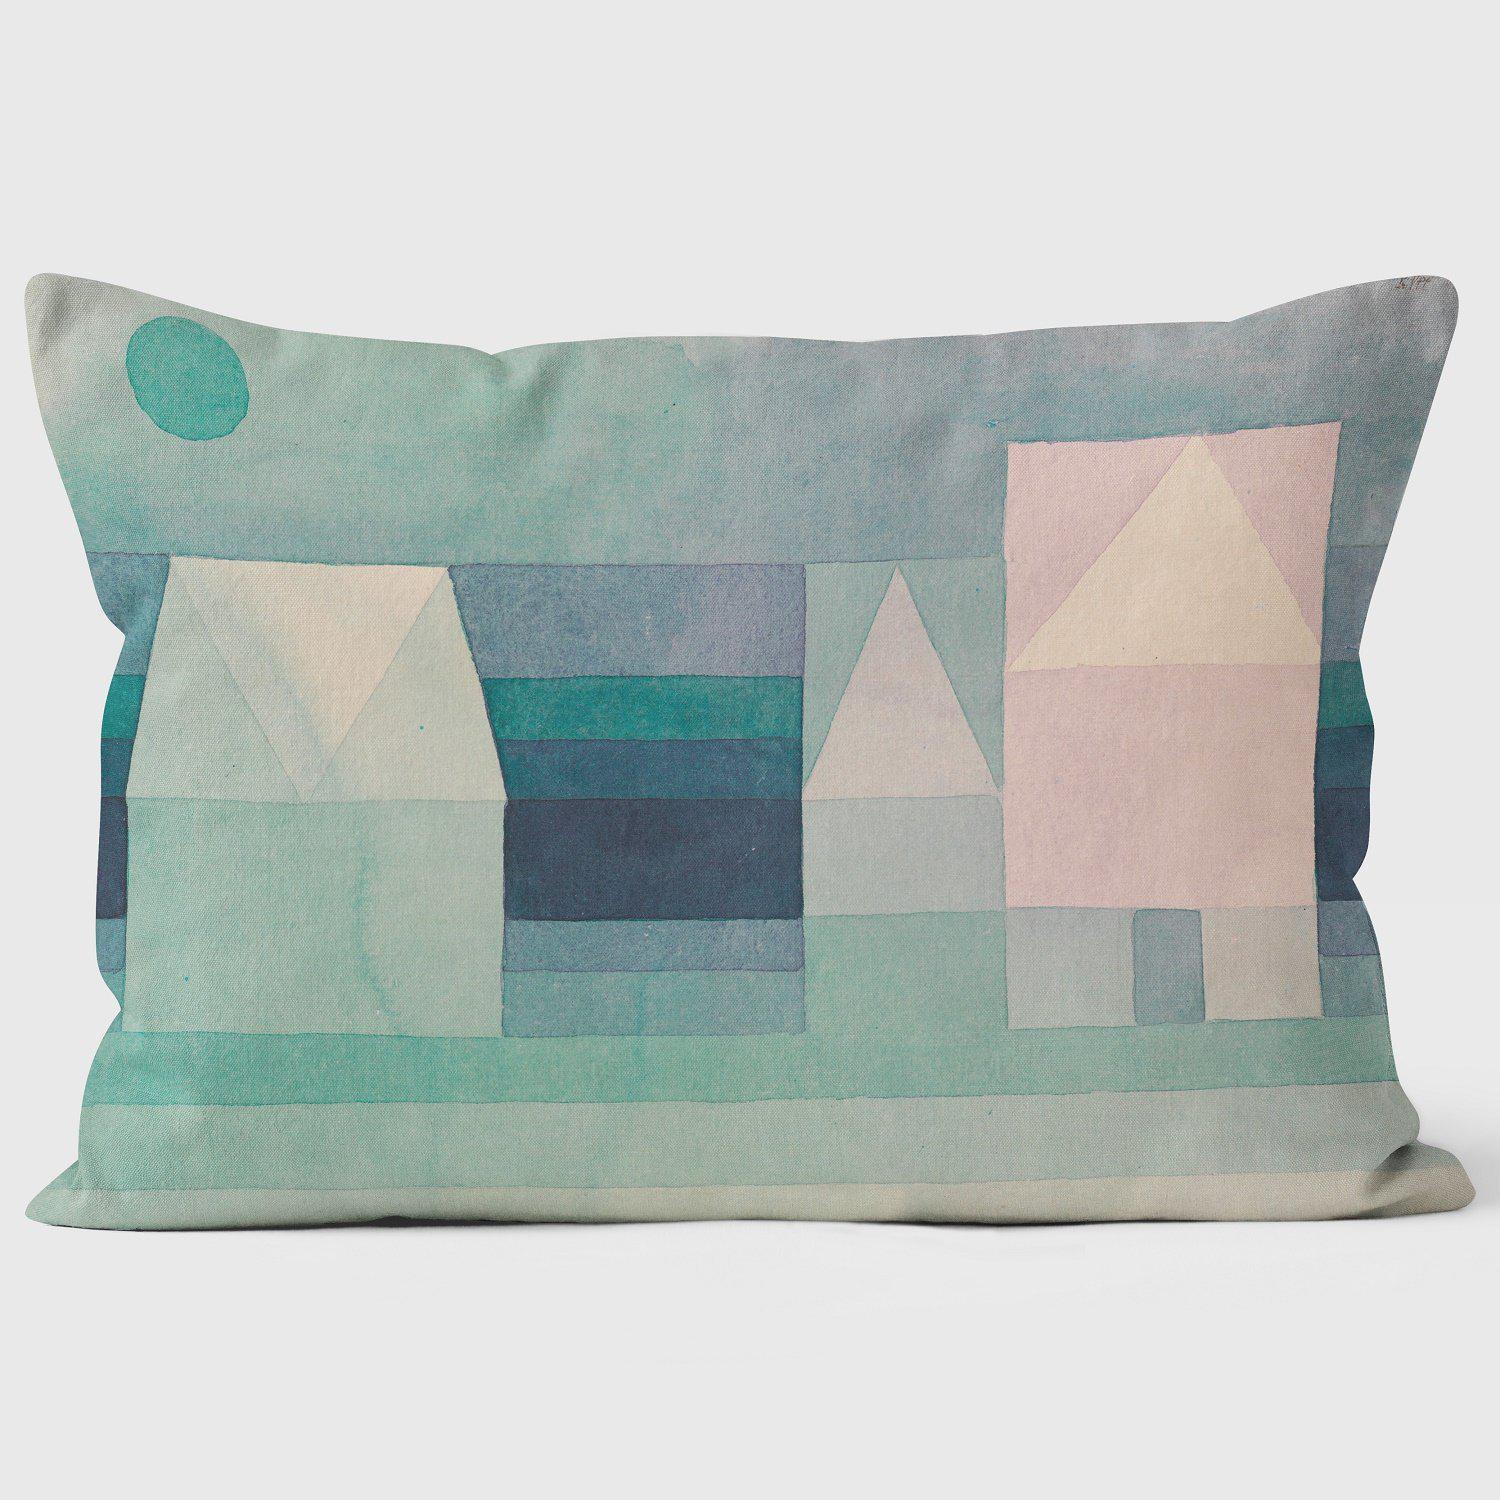 Three Houses - Paul Klee Cushion - Handmade Cushions UK - WeLoveCushions